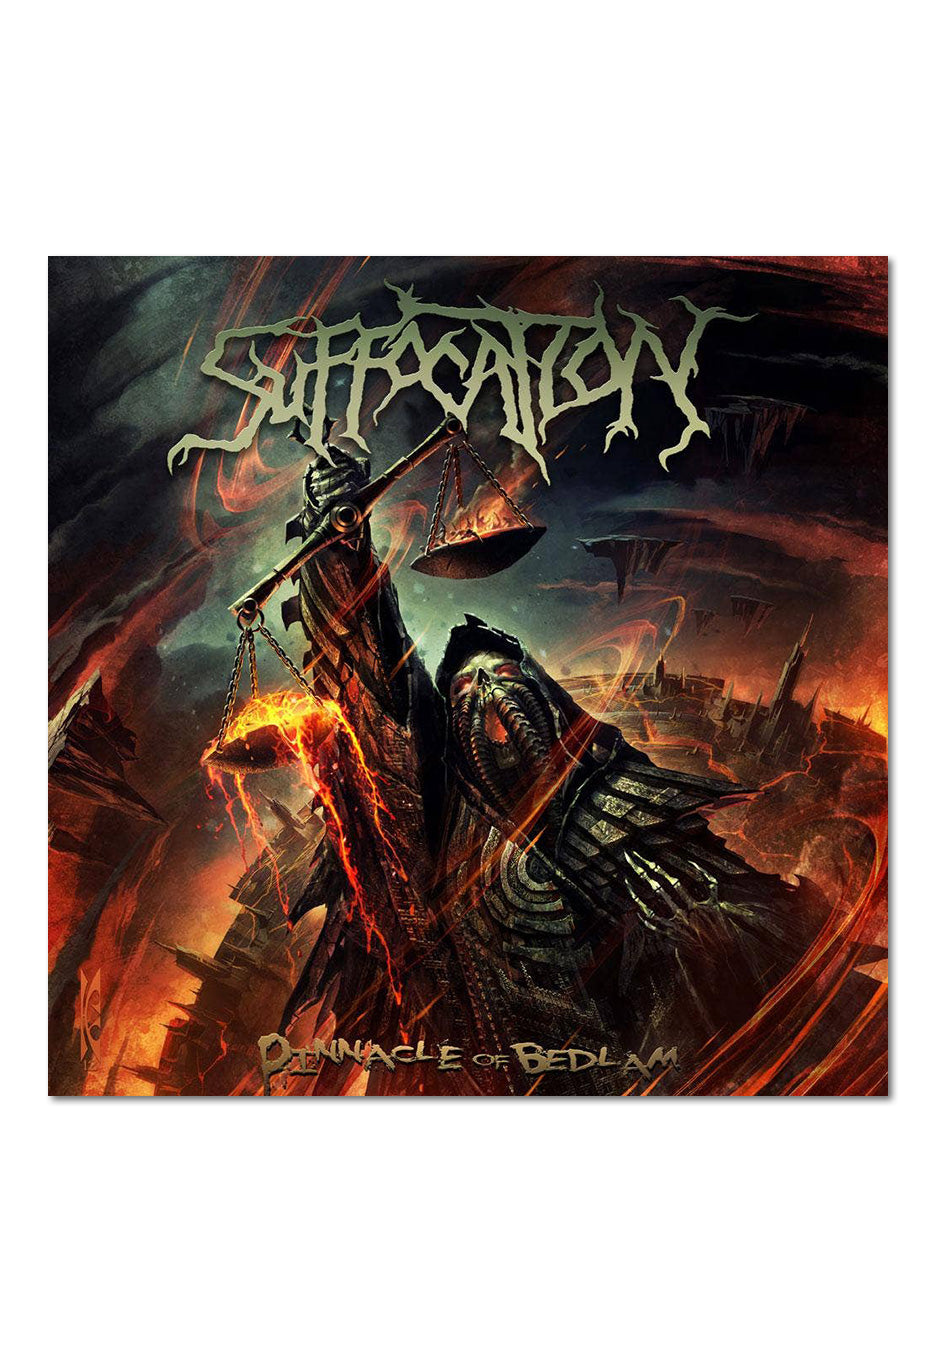 Suffocation - Pinnacle Of Bedlam - CD